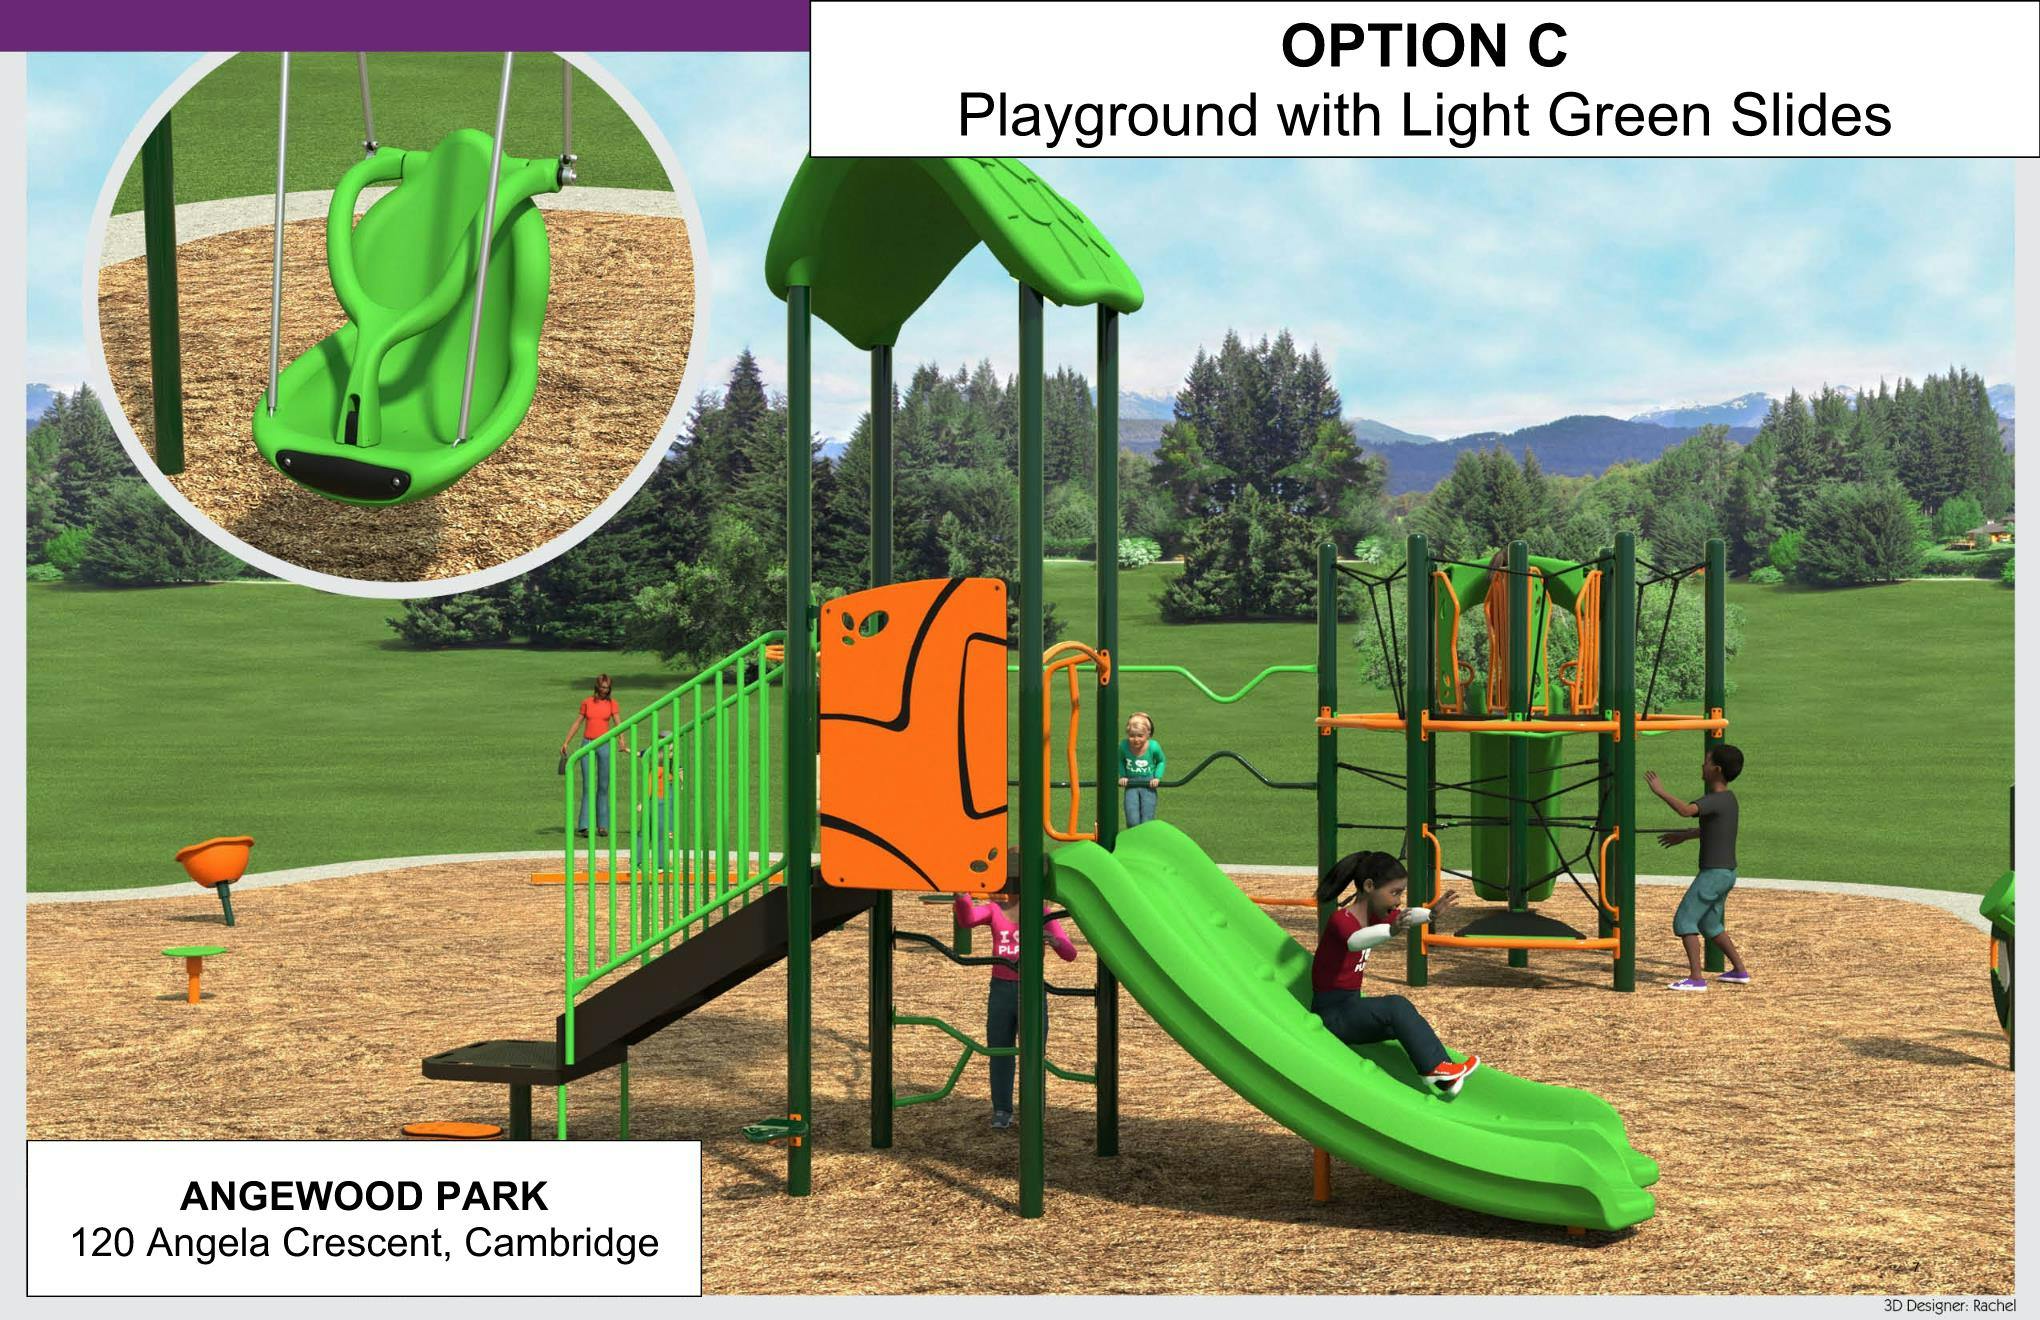 Option C - Playground with Light Green Slides